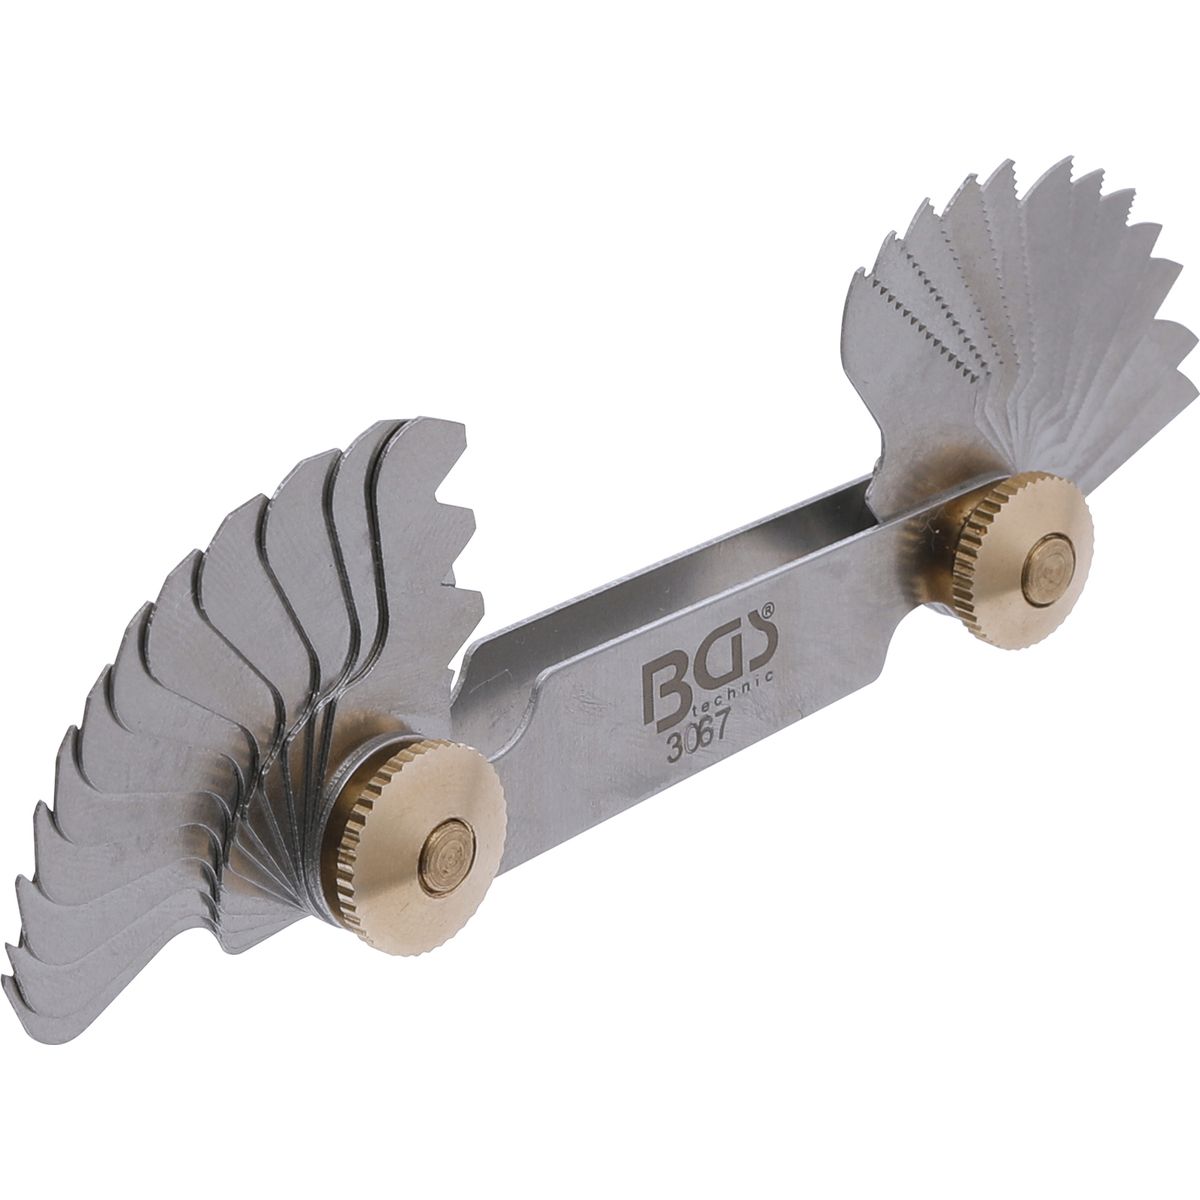 Screwpitch Gauge | 24 Blades | Metric 0.25 - 6.00 mm